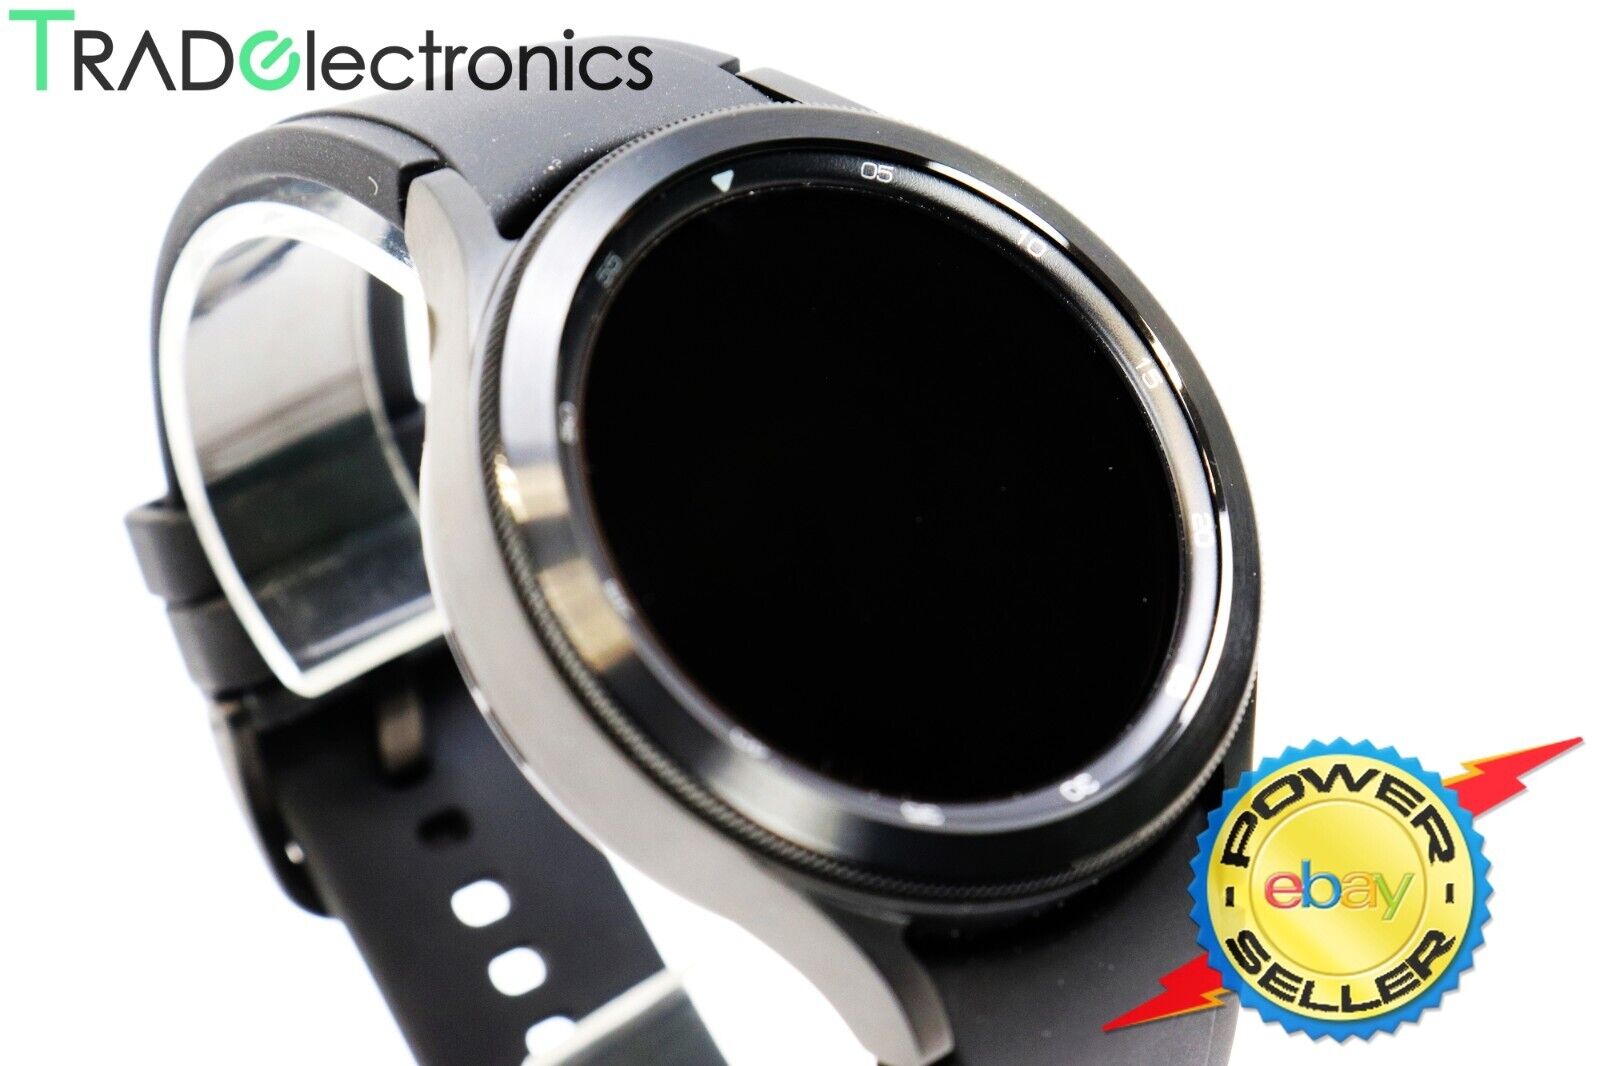 46mm Samsung Classic Tradelectronics Black Watch GPS | Galaxy 4